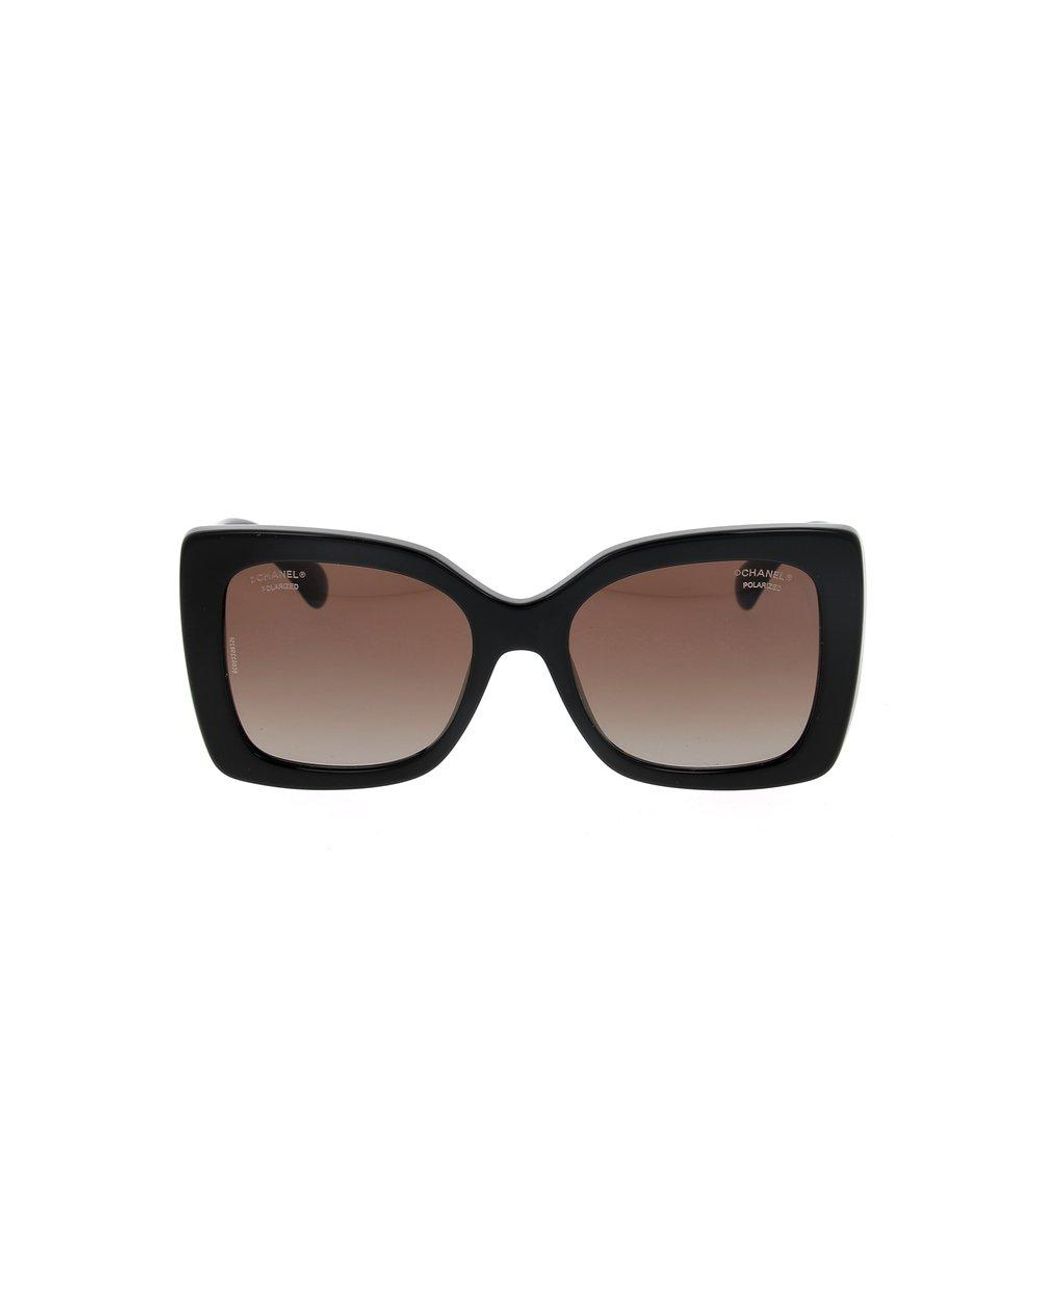 Chanel Square-frame Sunglasses in Black